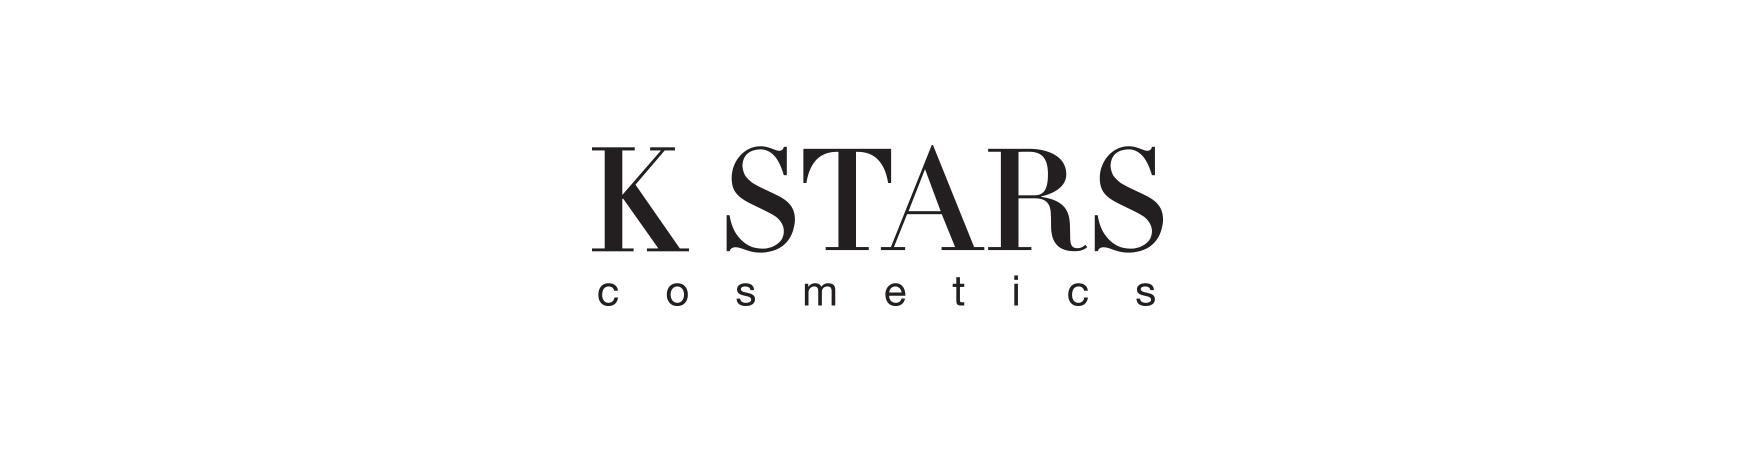 Kstars Cosmetics